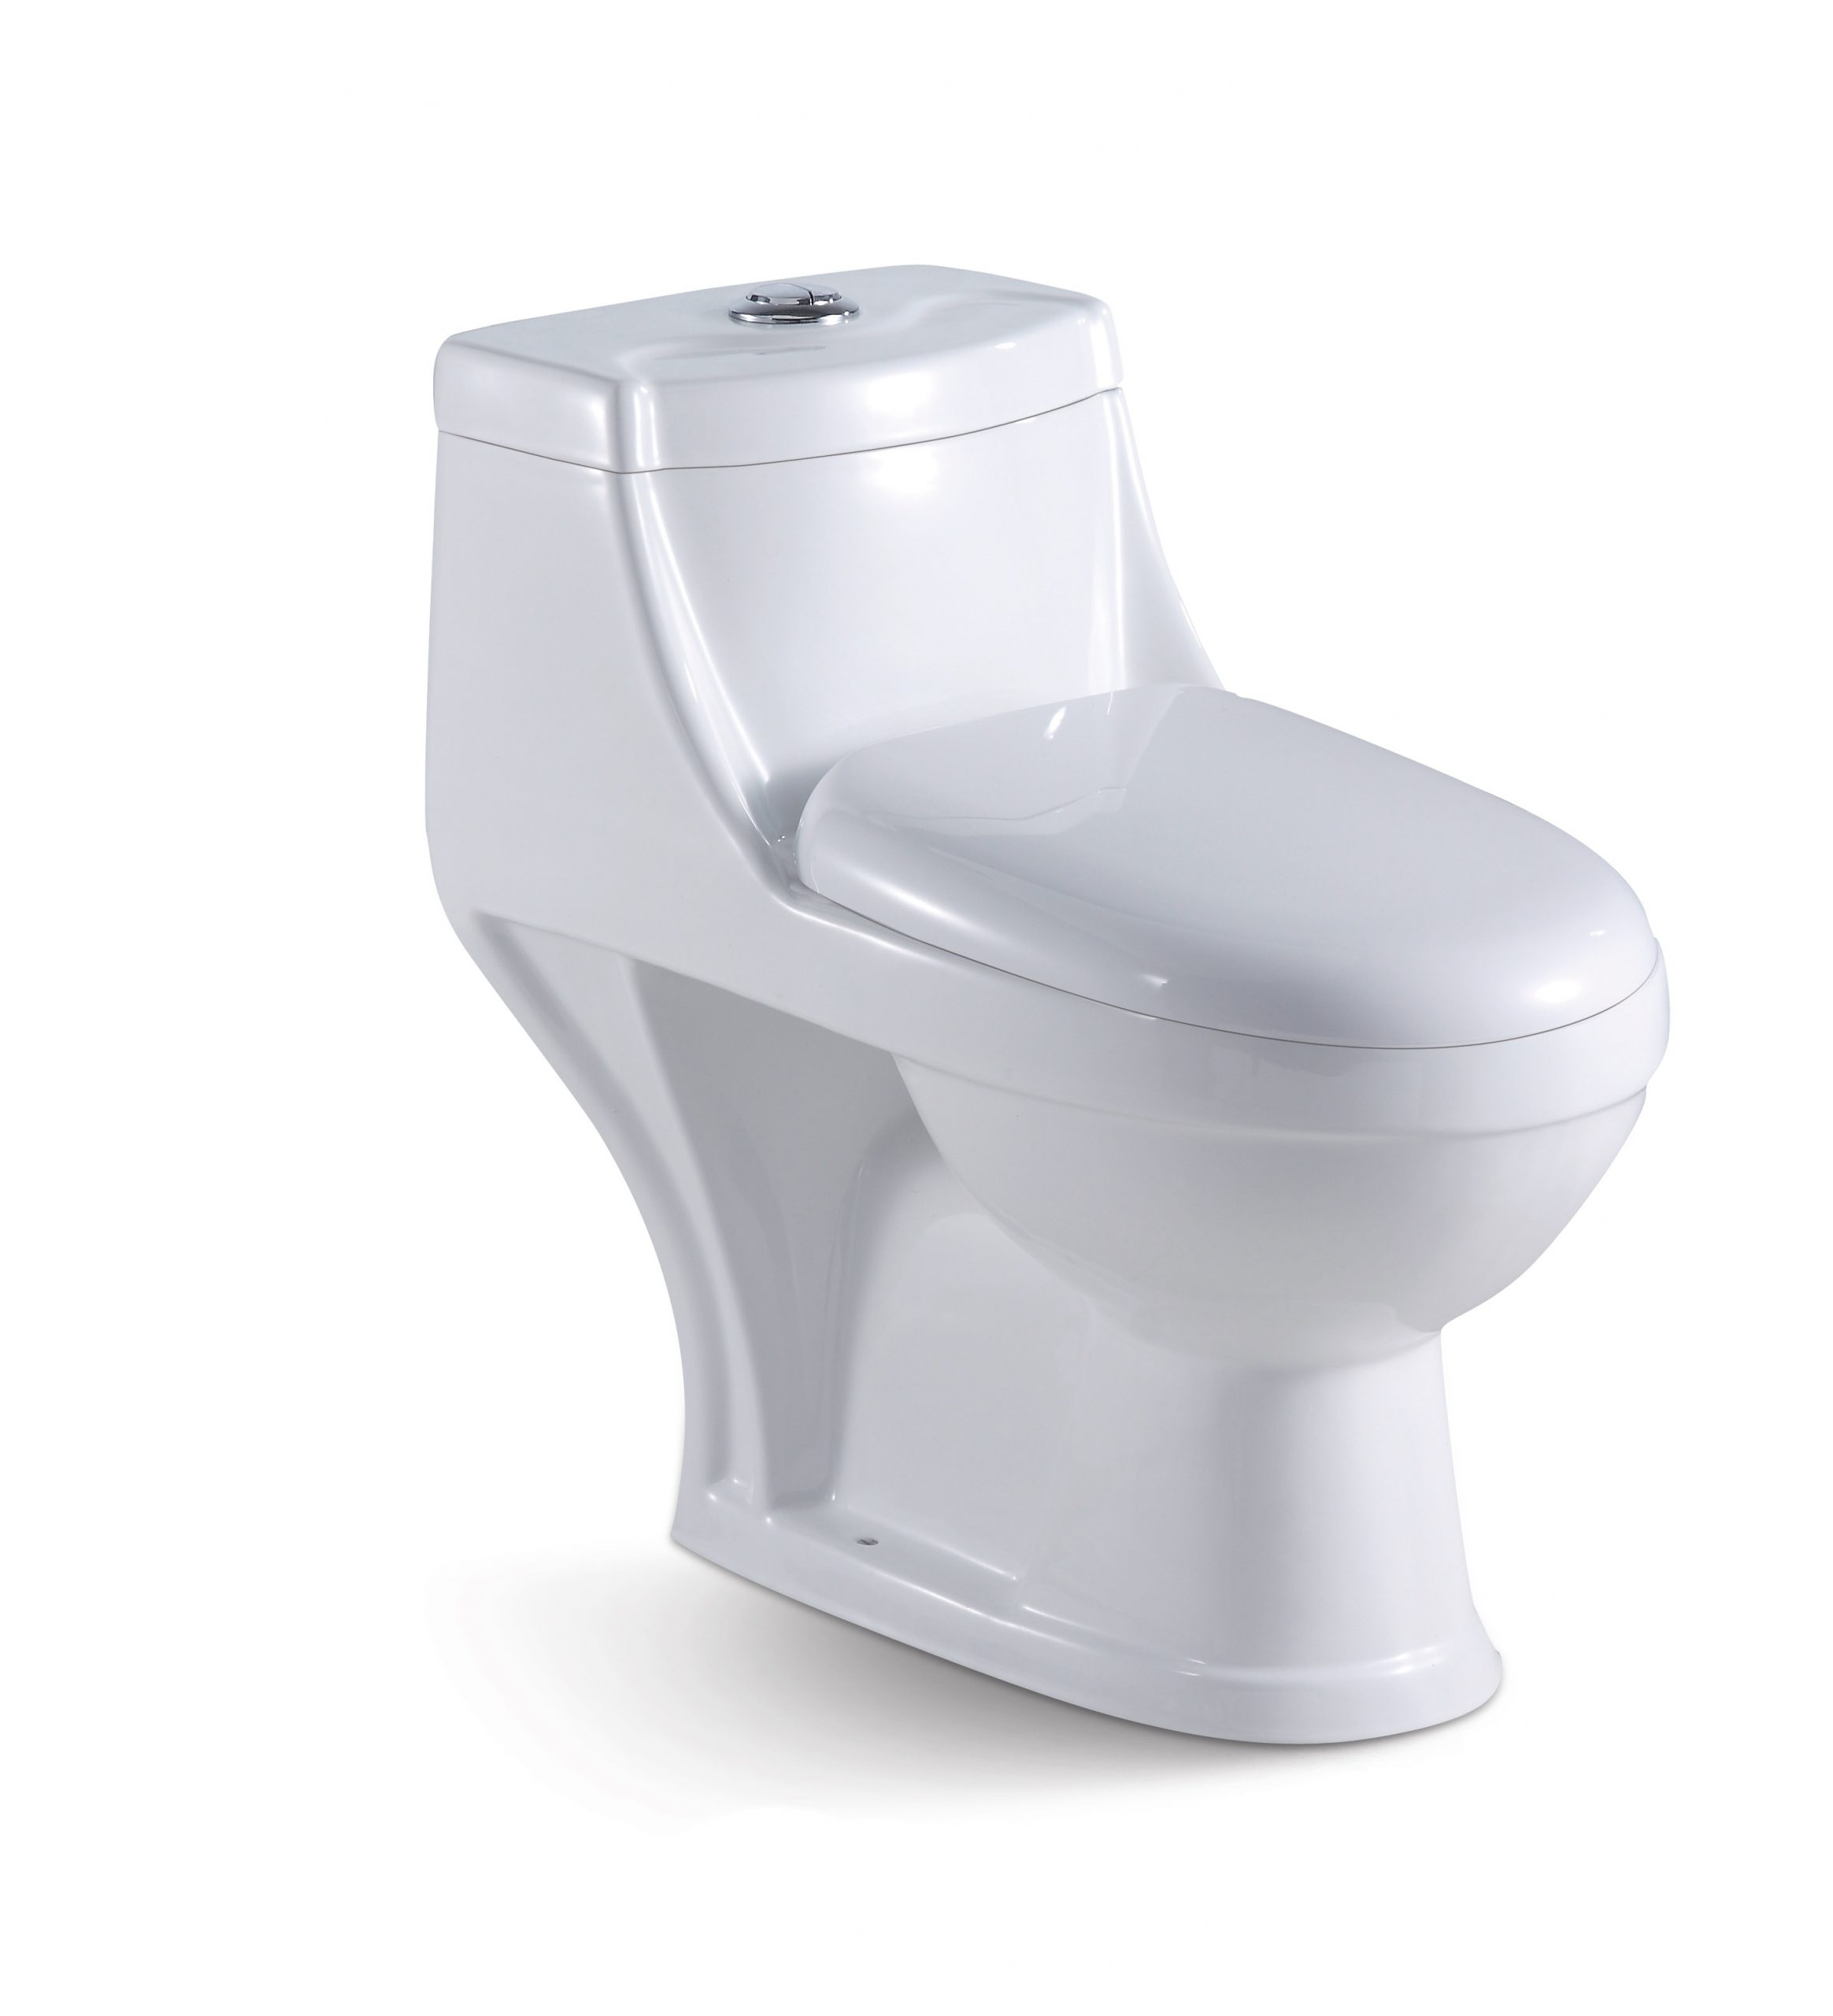 Latin America WC Bathroom Inodoro banos sanitario One-Piece Elongated  Toilet ORTONBATH™ Dual-Flush 3.3/4.8L PER FLUSH OTC1638 - Orton Baths